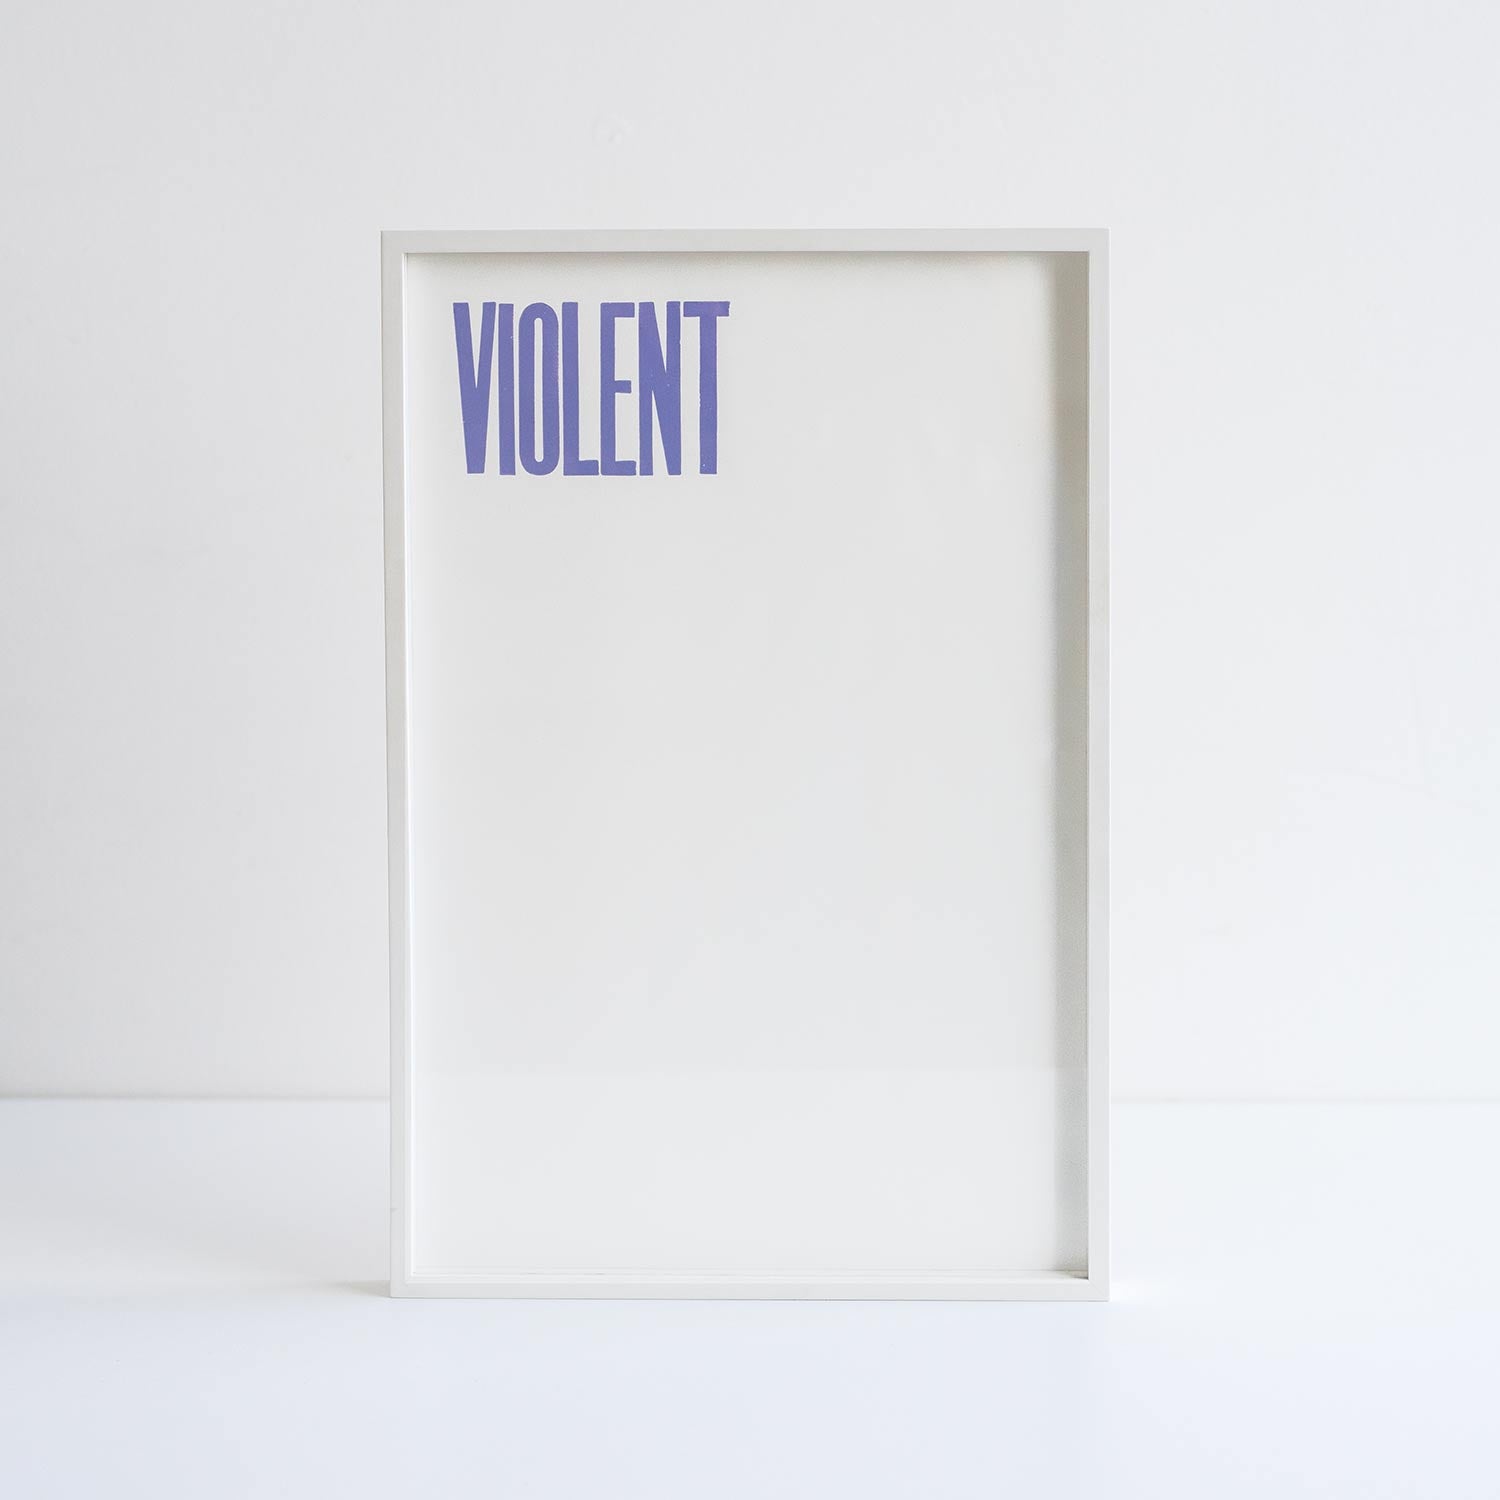 Pavel Buchler 'voilent' print in a white frame against white background